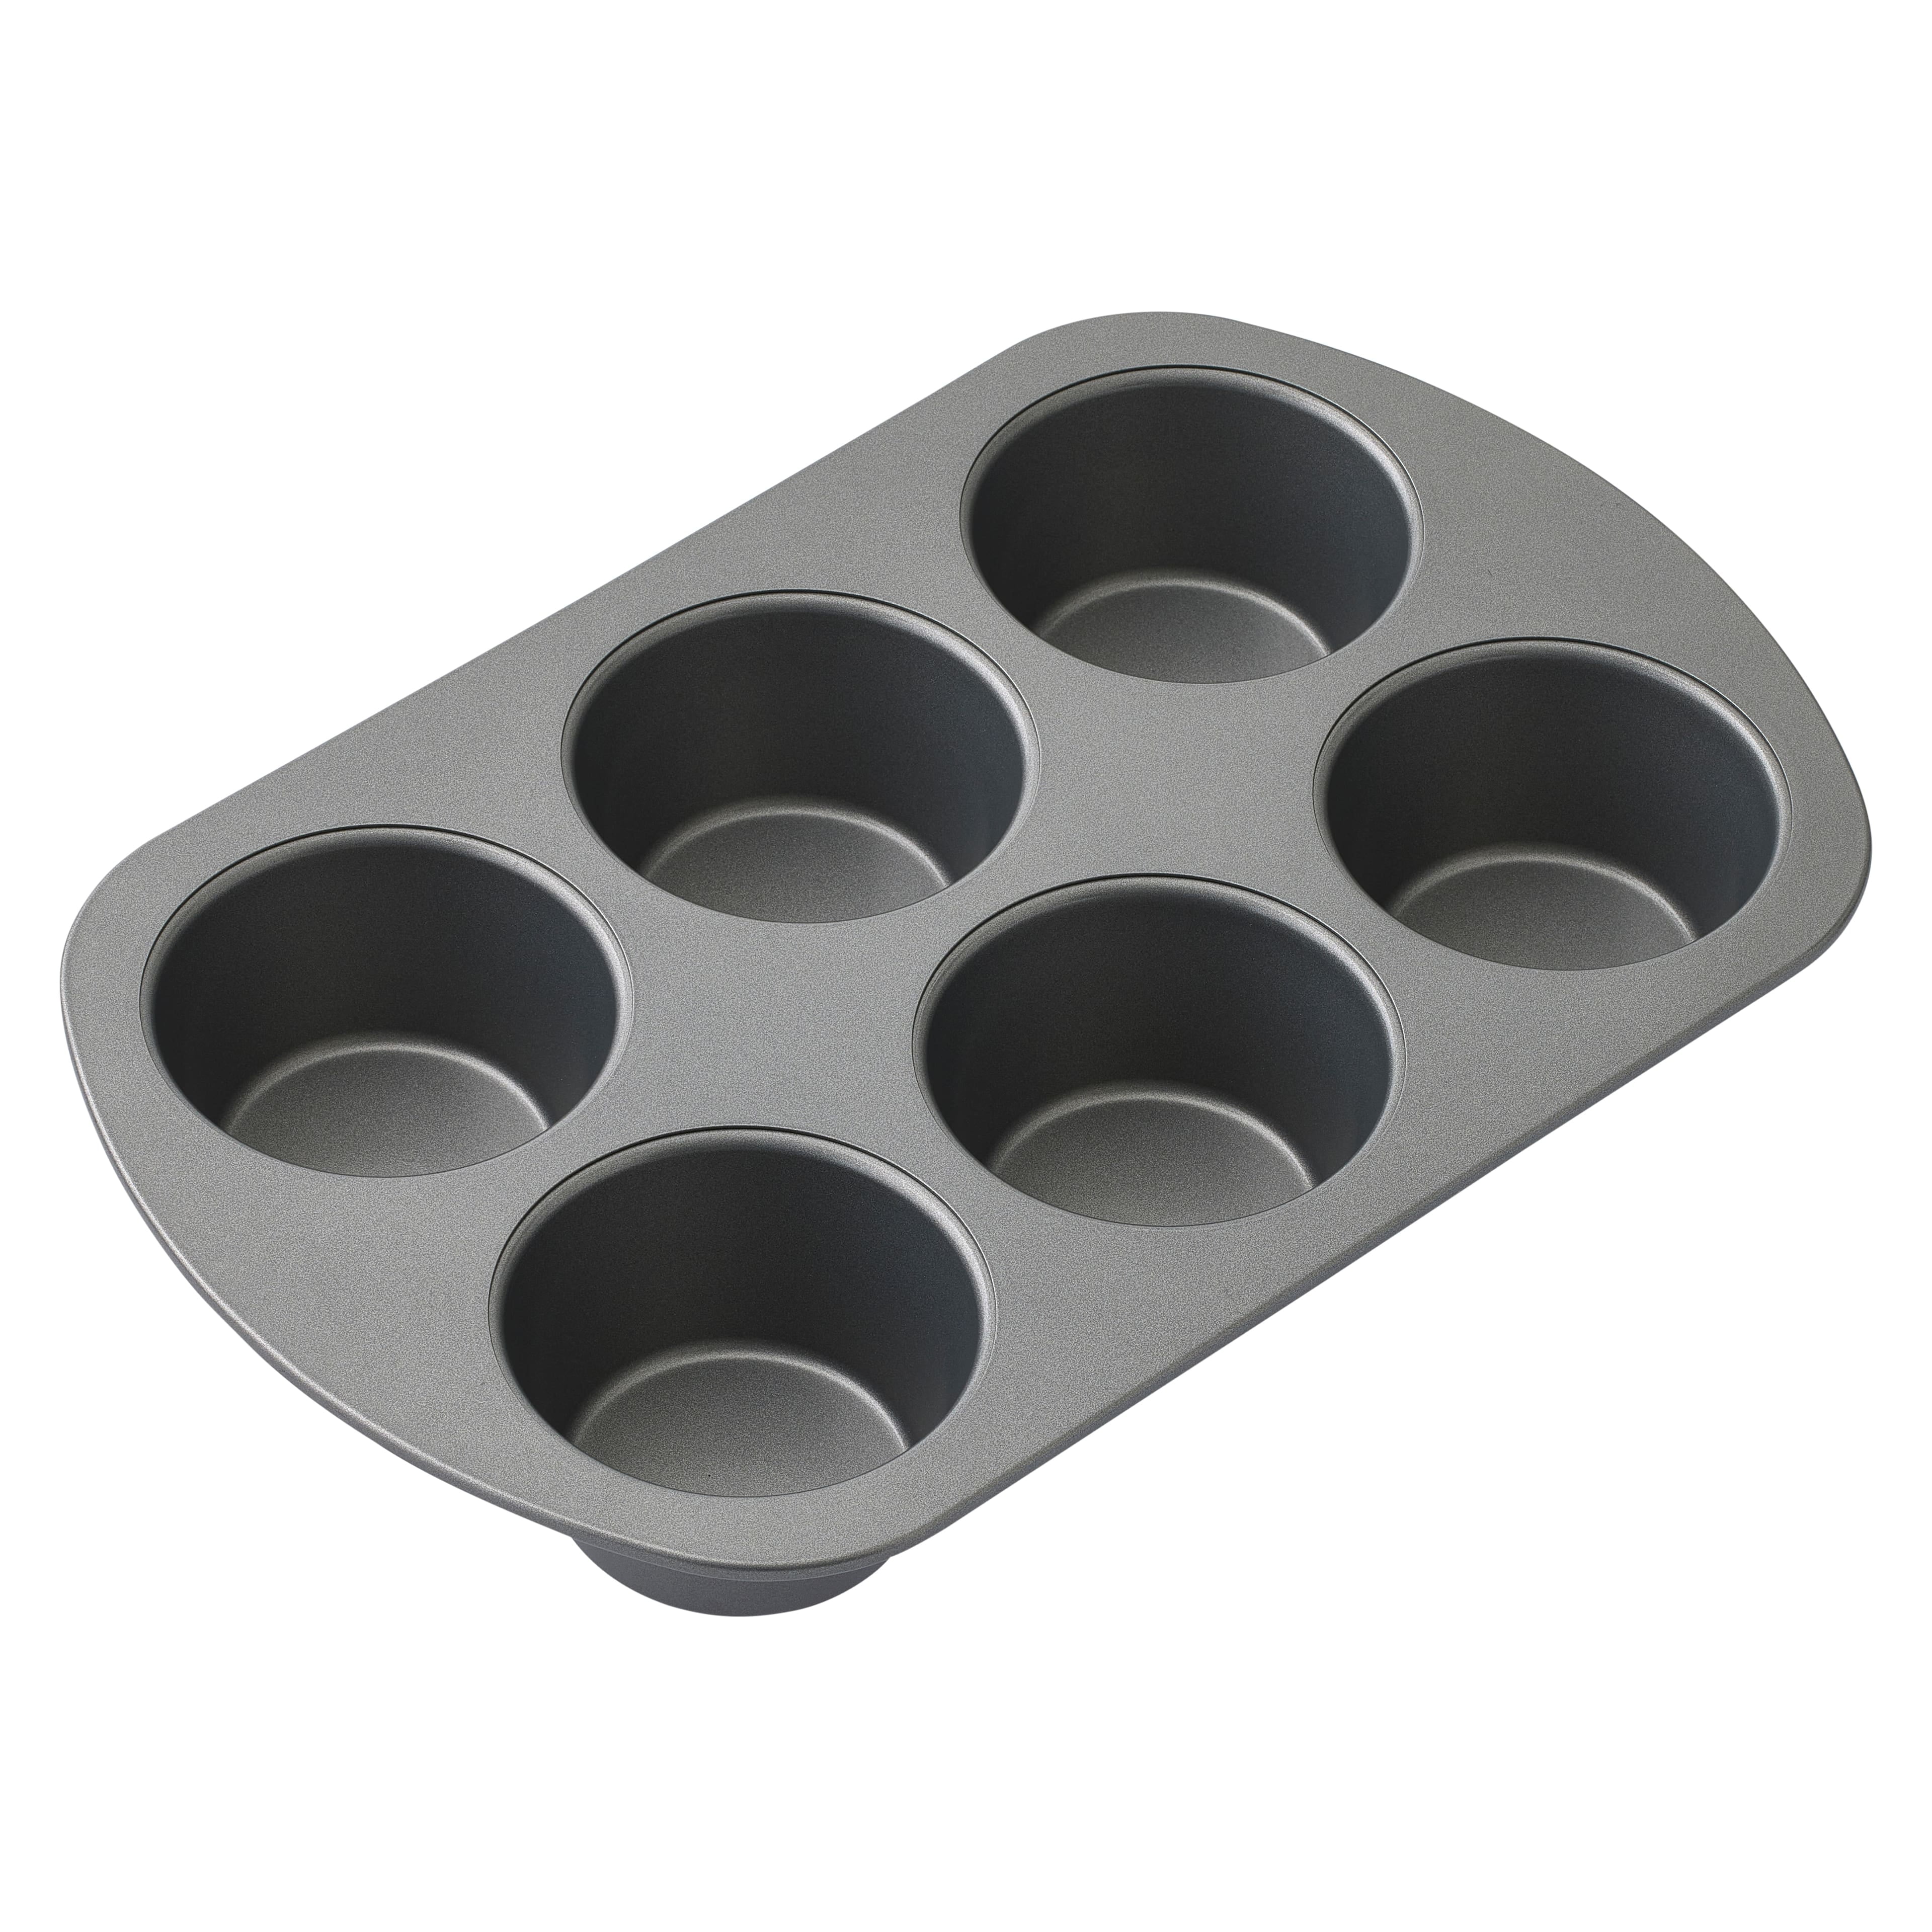 BakeIns Non-Stick Muffin Pan / Cupcake Pan, 6 Cup - Ecolution